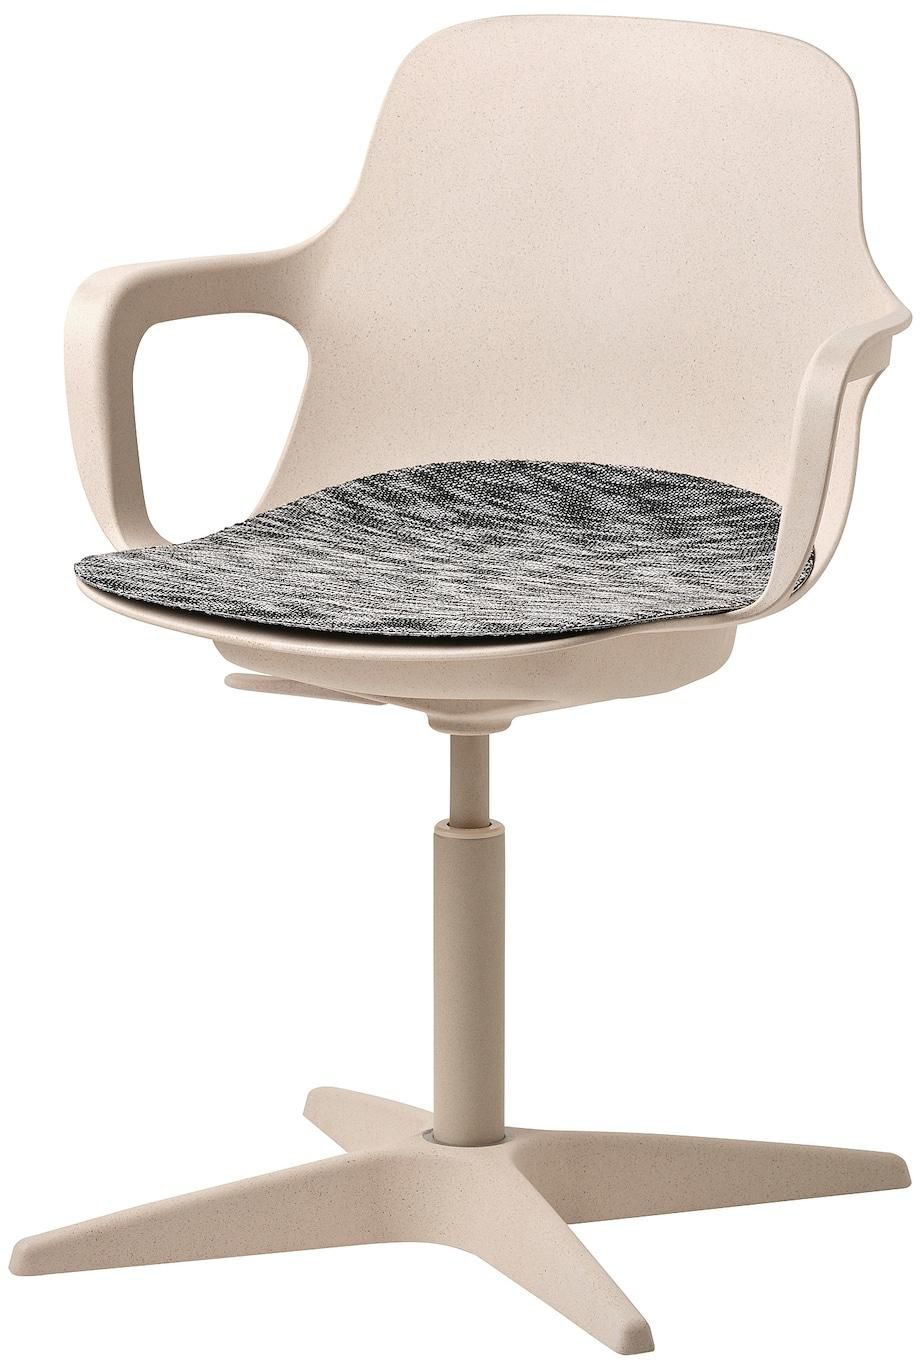 ODGER Swivel chair + pad - white/beige